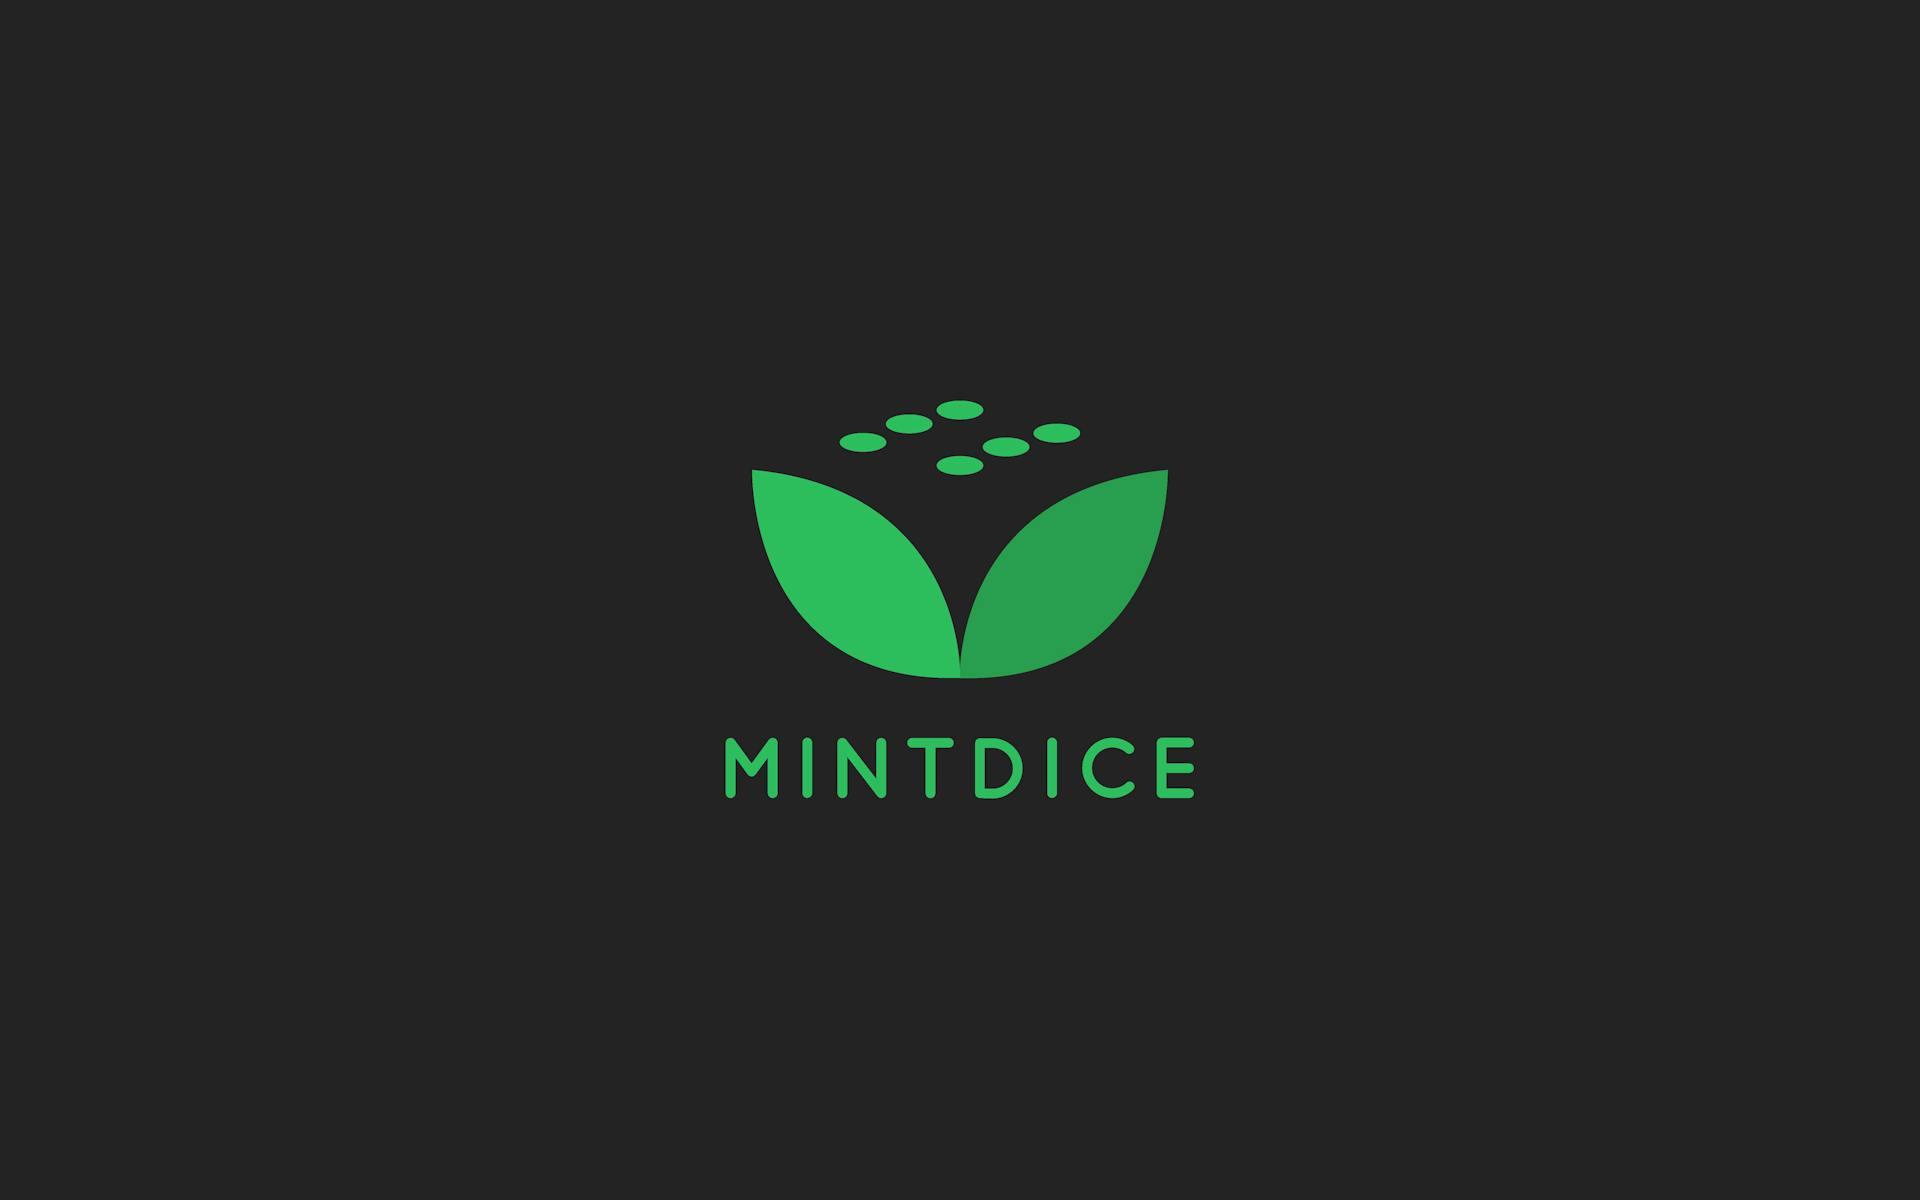 MintDice Blog Post Image